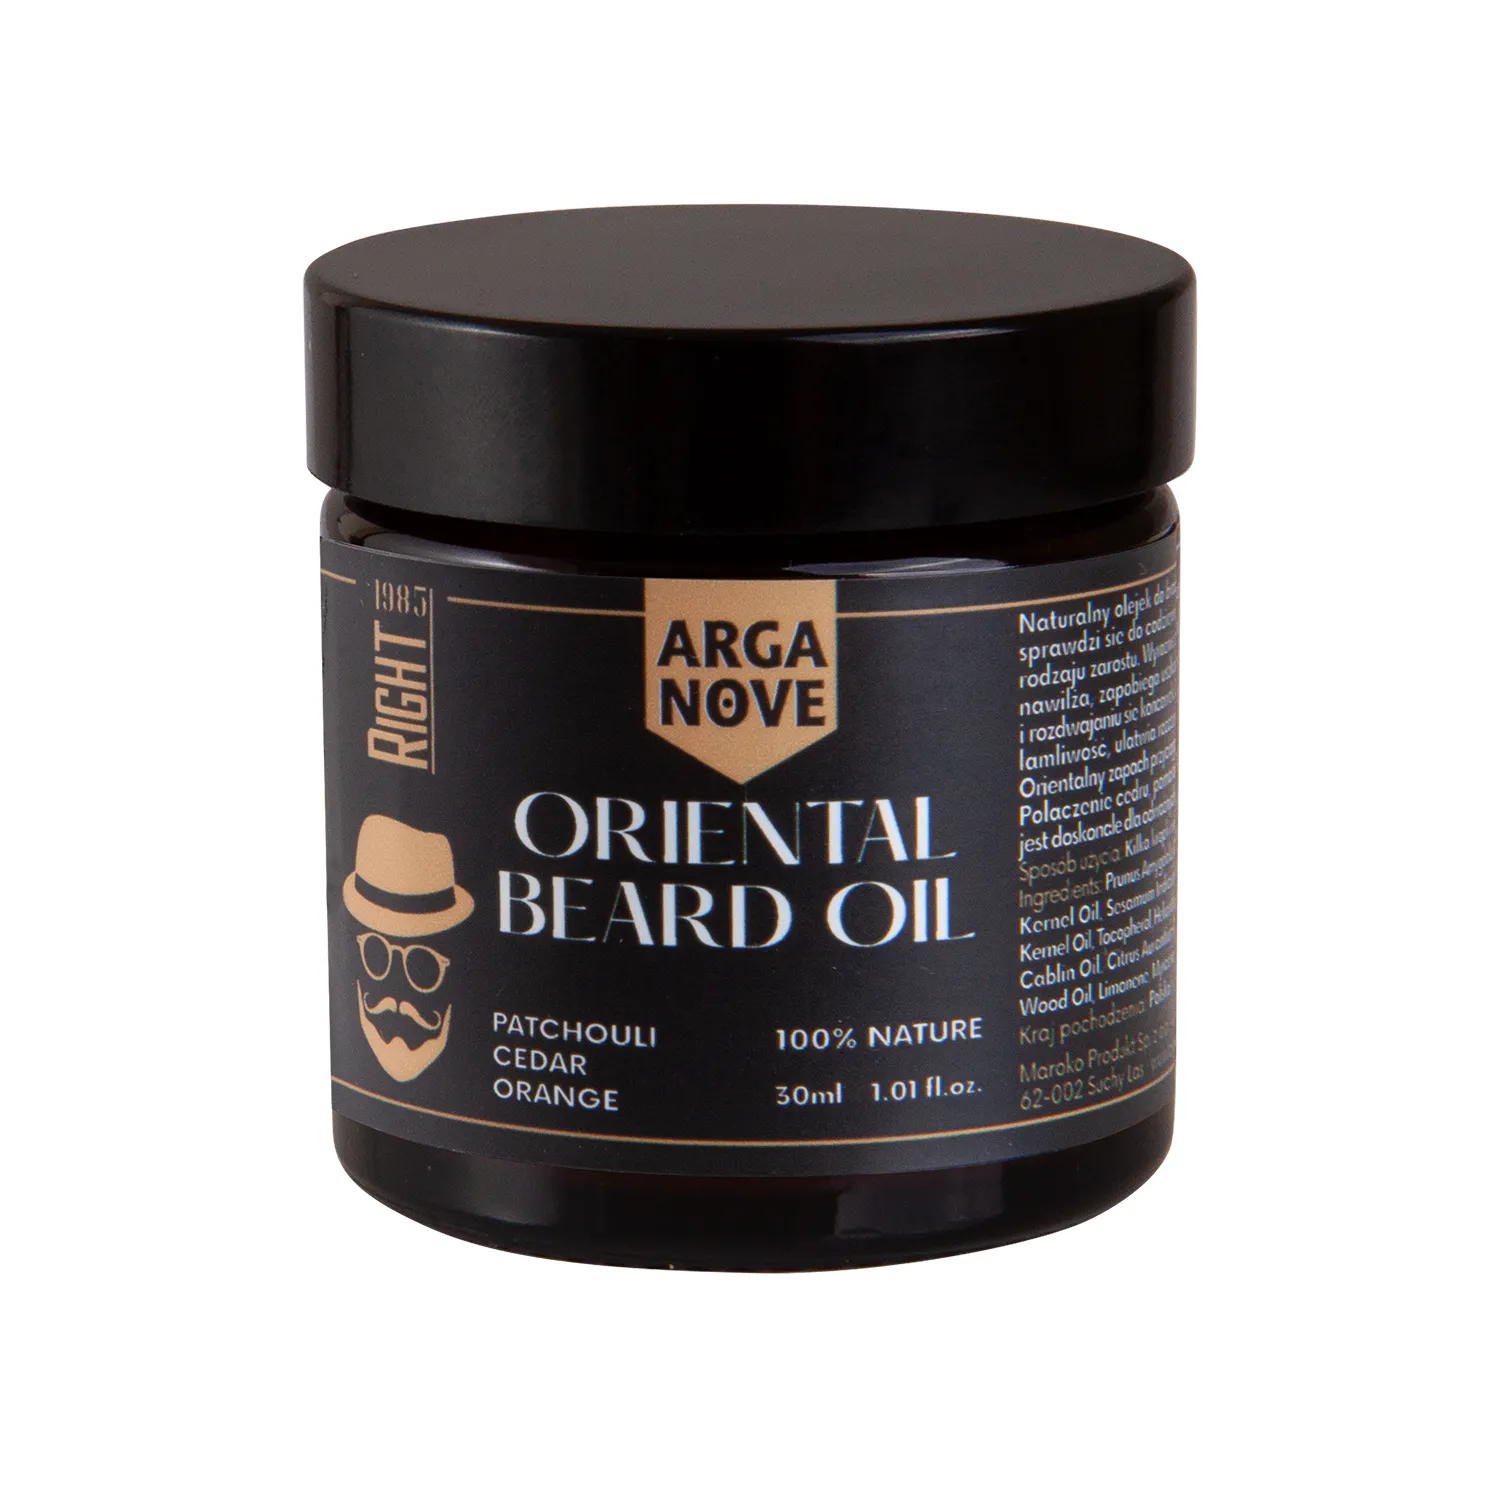 Arganove Mr. Right Oriental Beard Oil naturalny balsam do brody, 50 ml